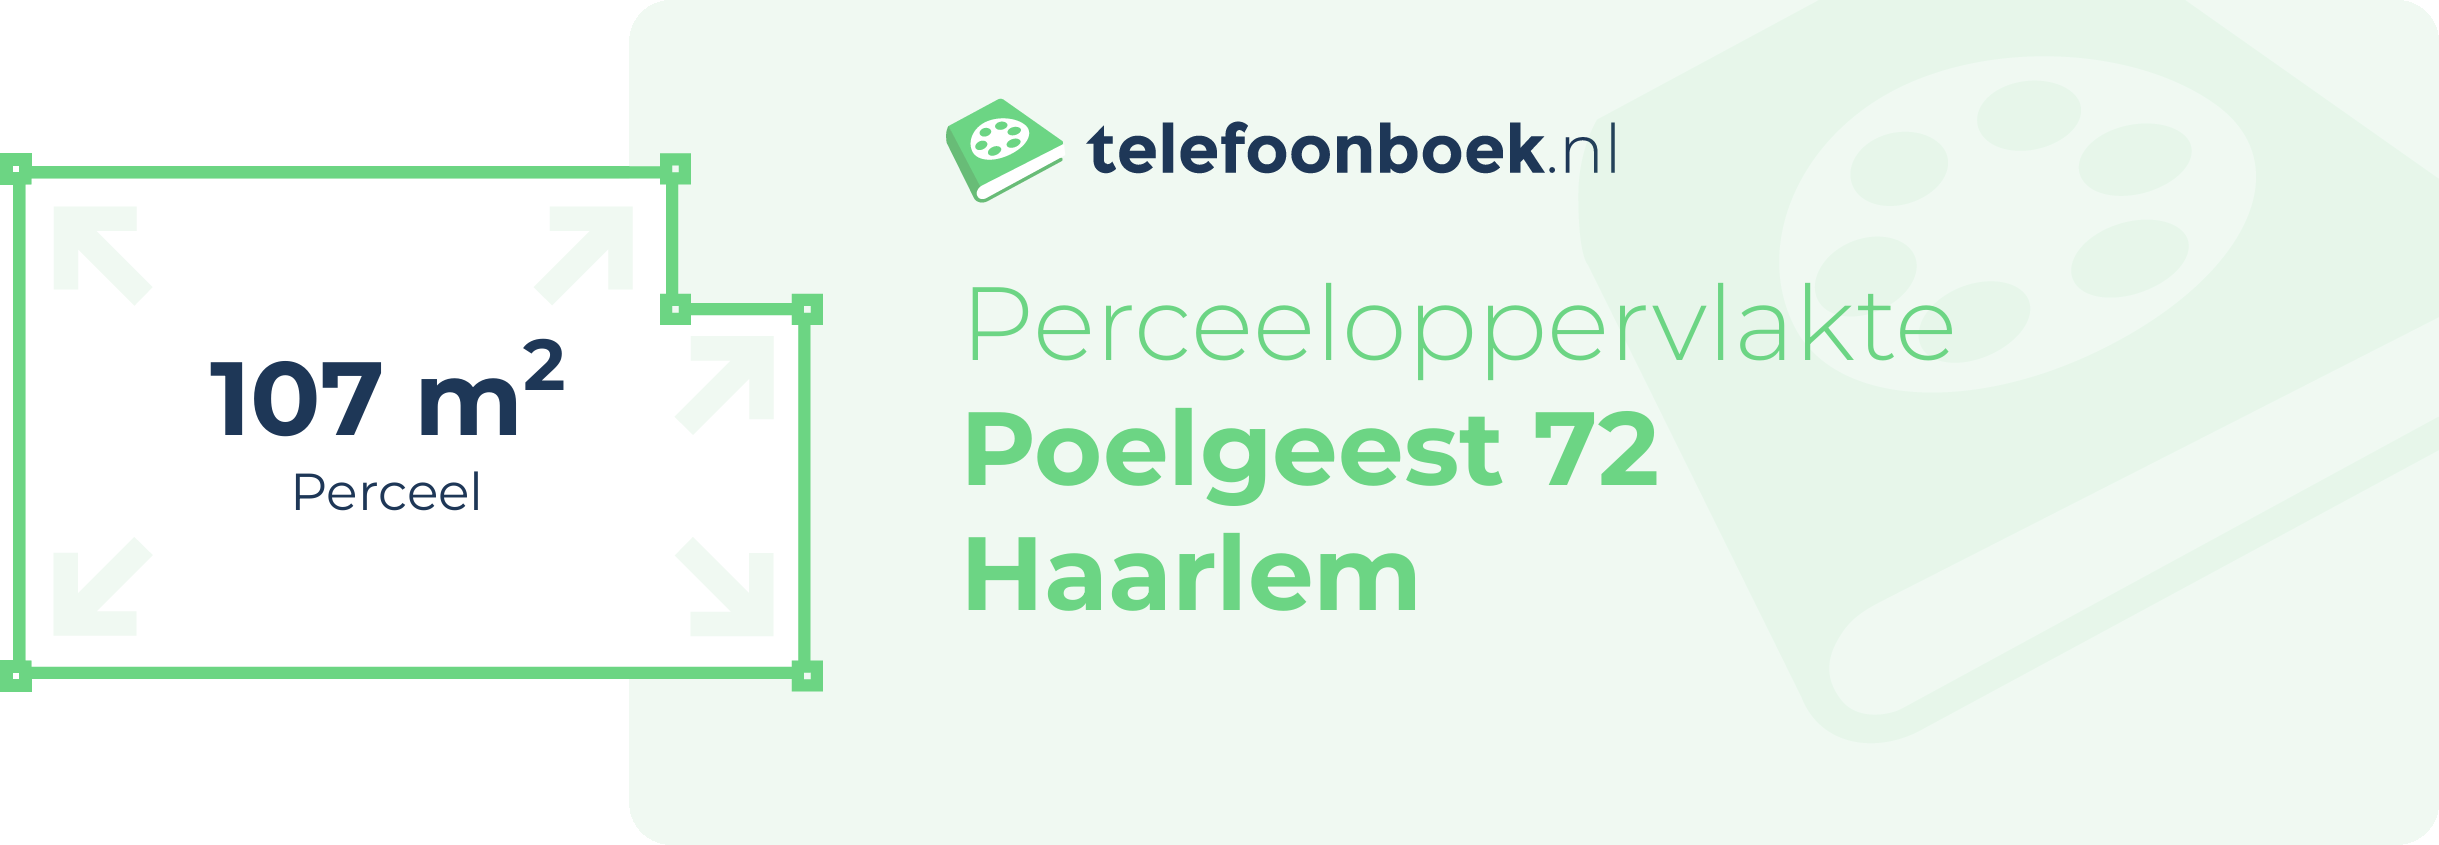 Perceeloppervlakte Poelgeest 72 Haarlem